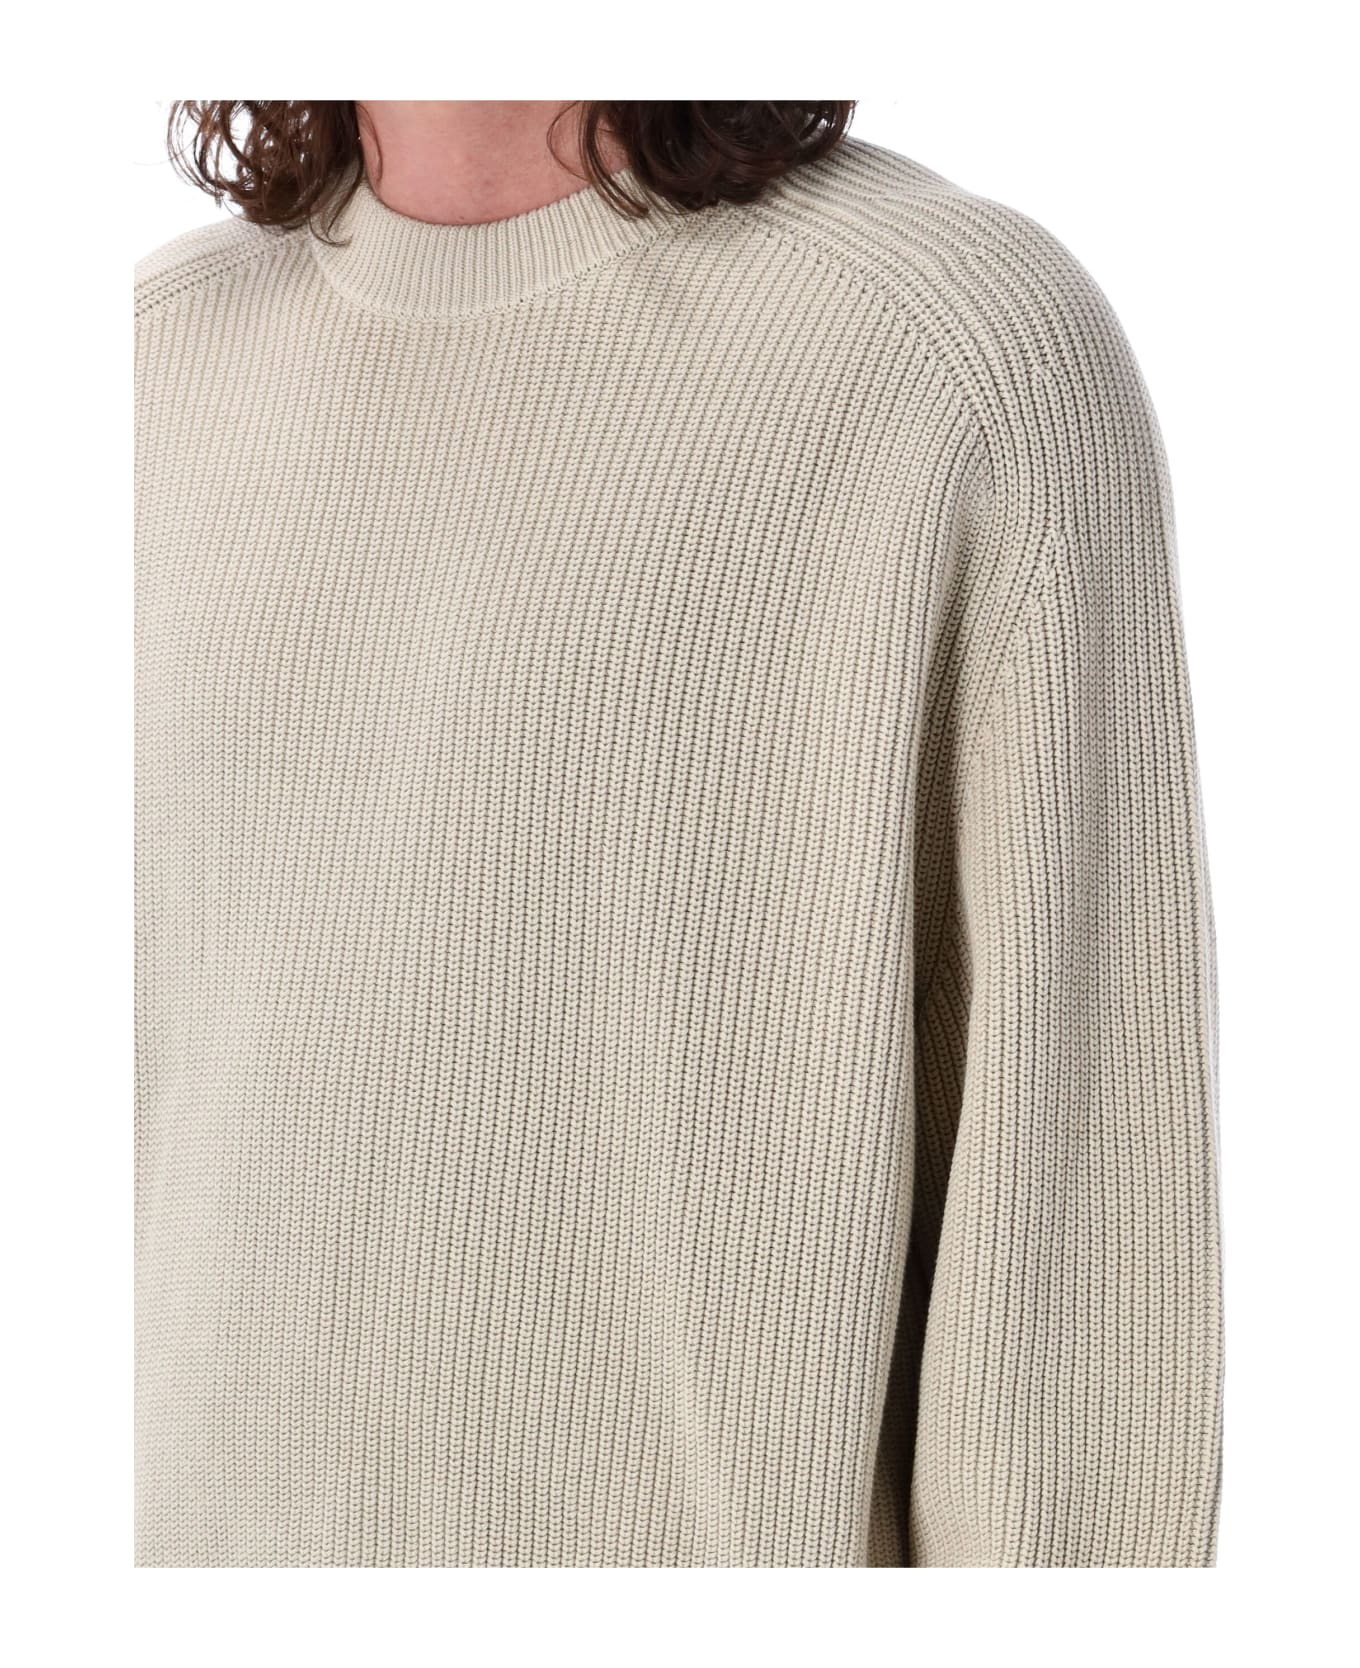 Studio Nicholson Coe Knit Sweater - CLOUD